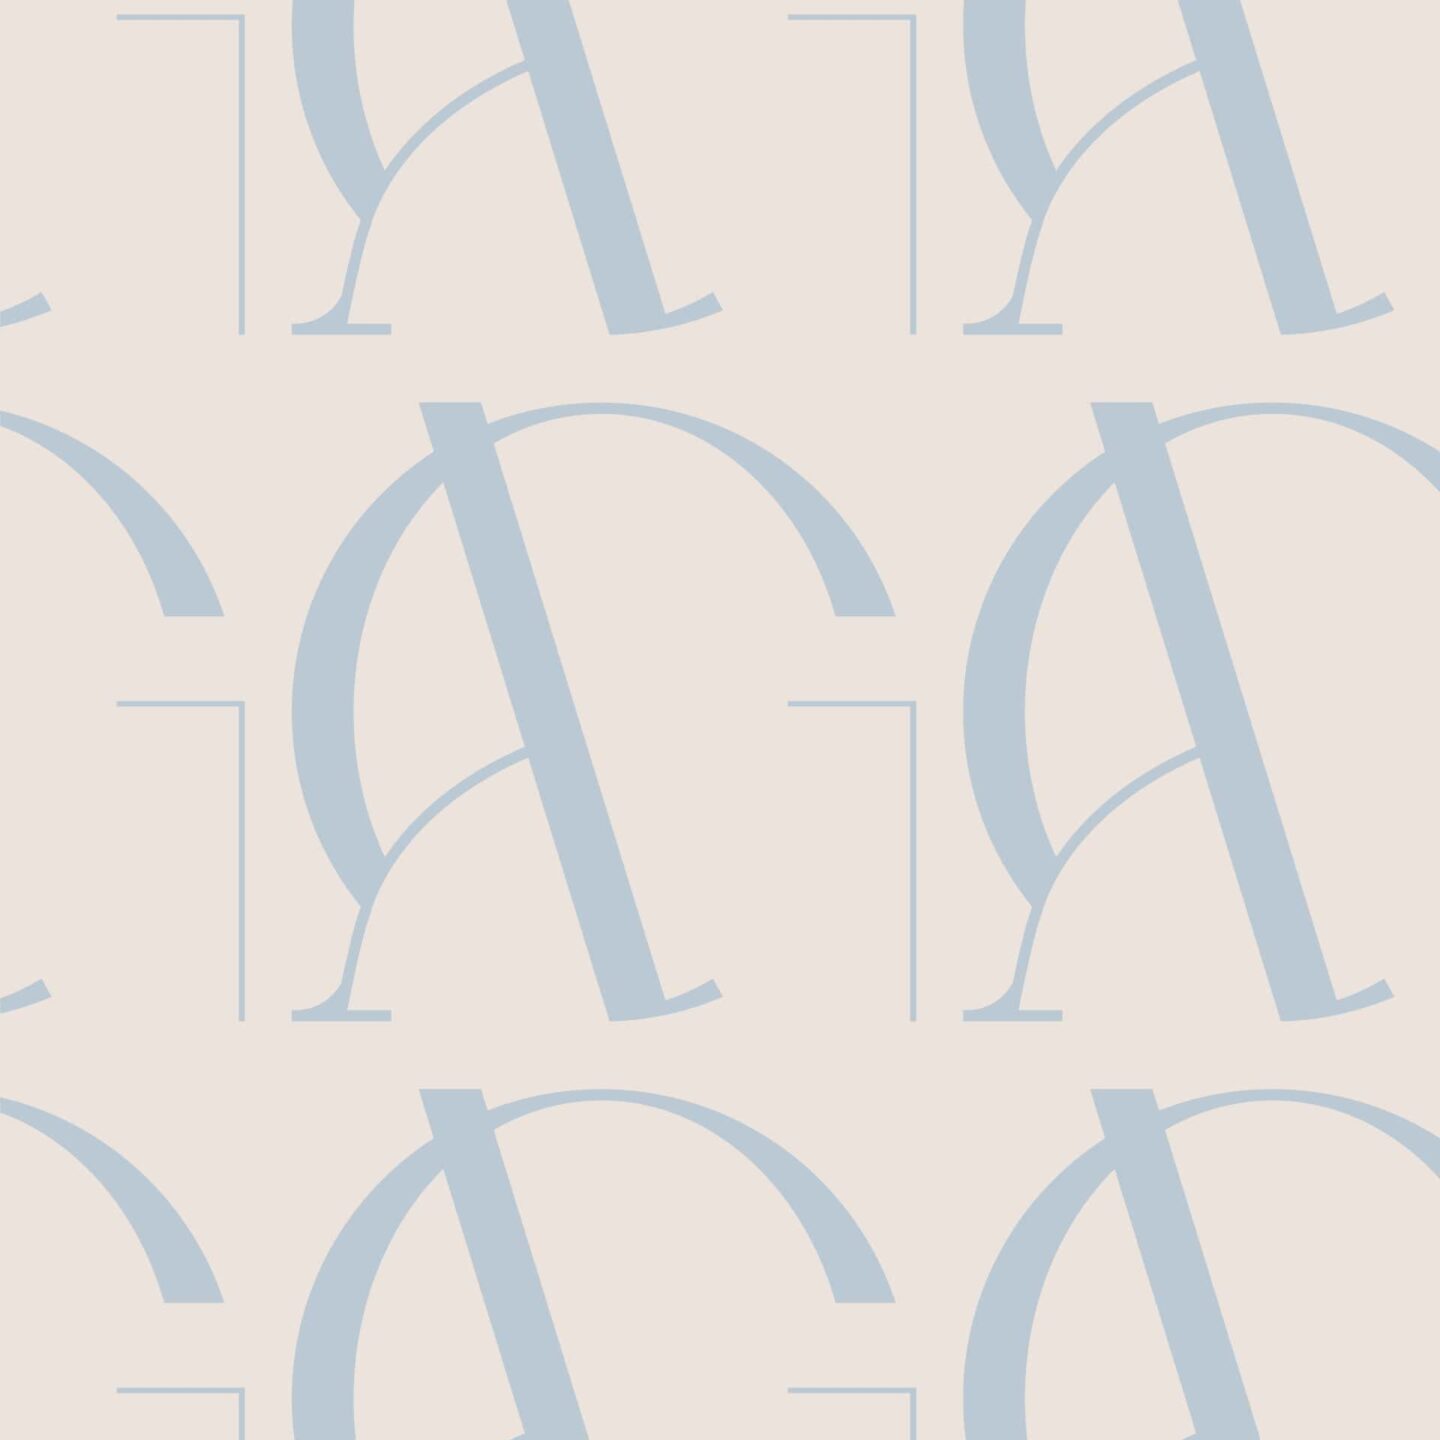 Archi-gate pattern logo